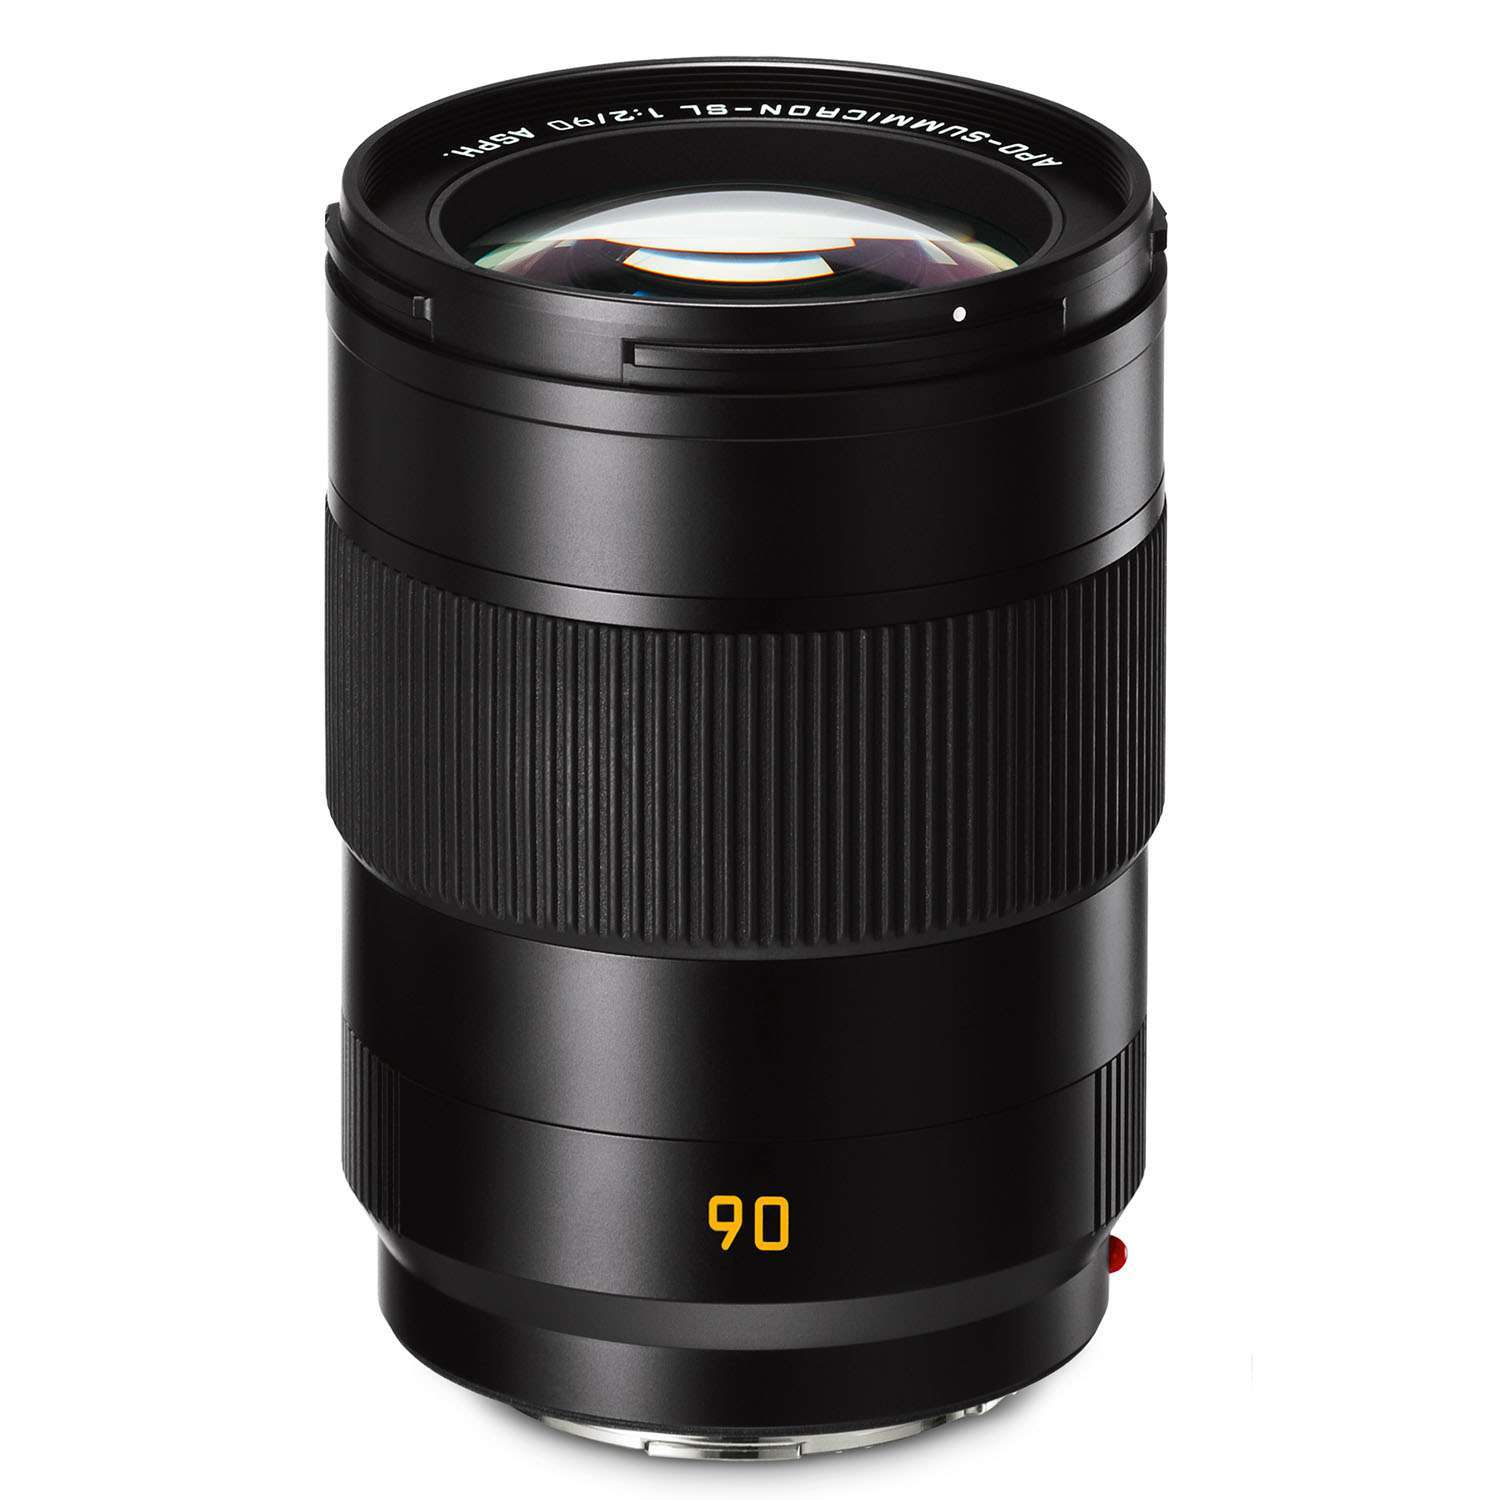 Leica SL 90mm f2.0 APO-Summicron